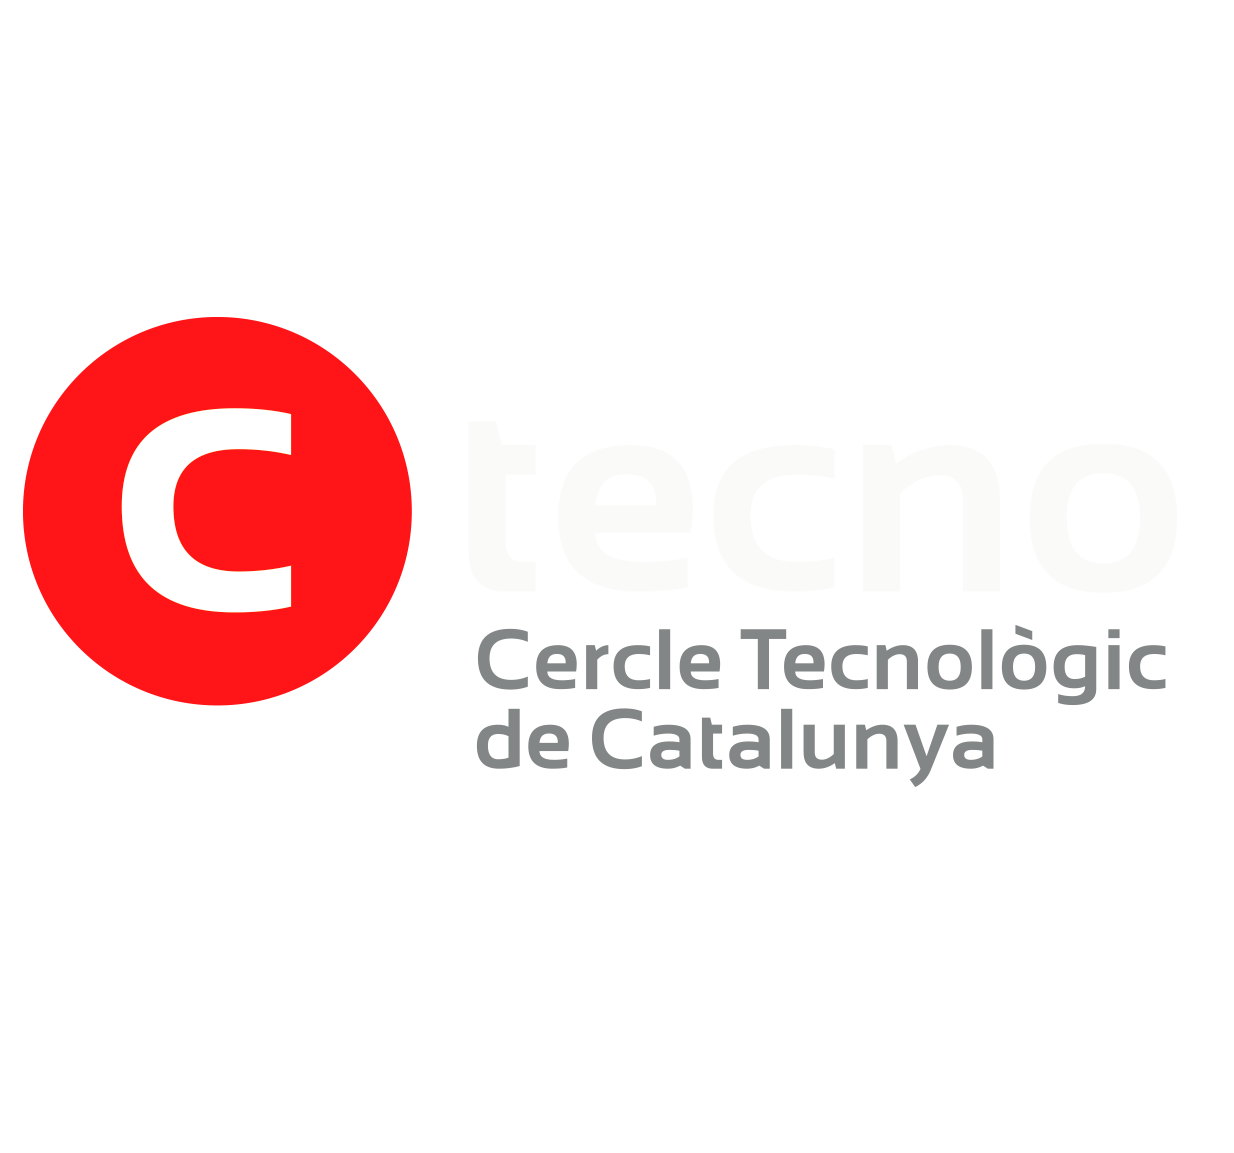 Logo Ctecno